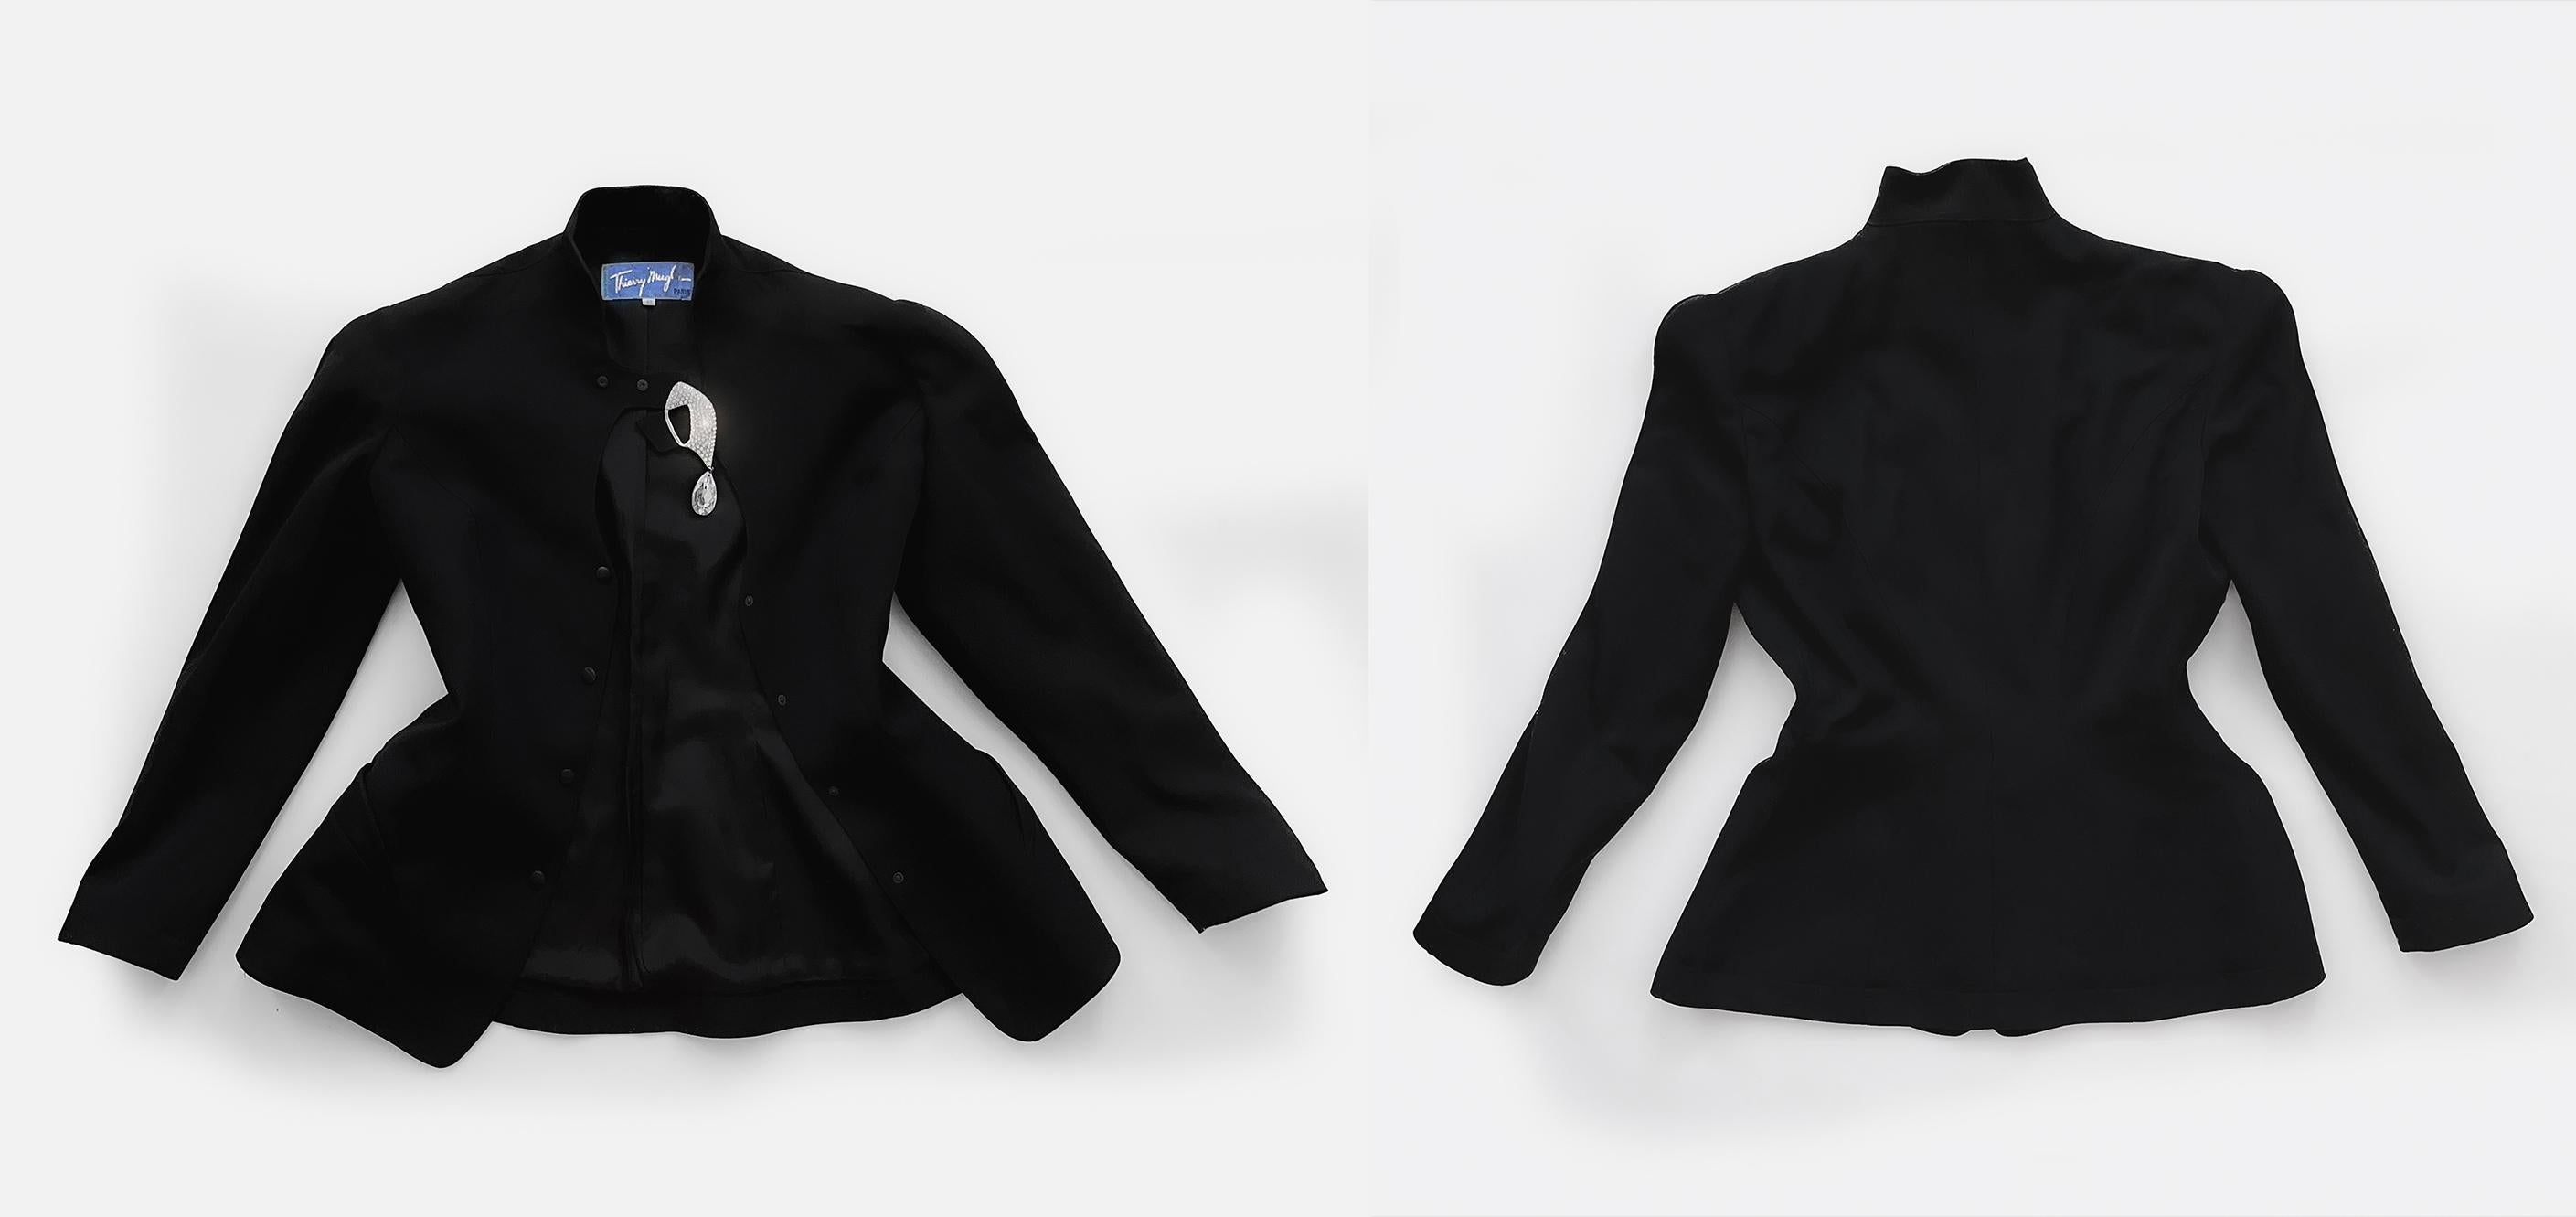 Gorgeous Thierry Mugler Crystal Glam Ensemble Sculptural Black Jacket Skirt Set  For Sale 2